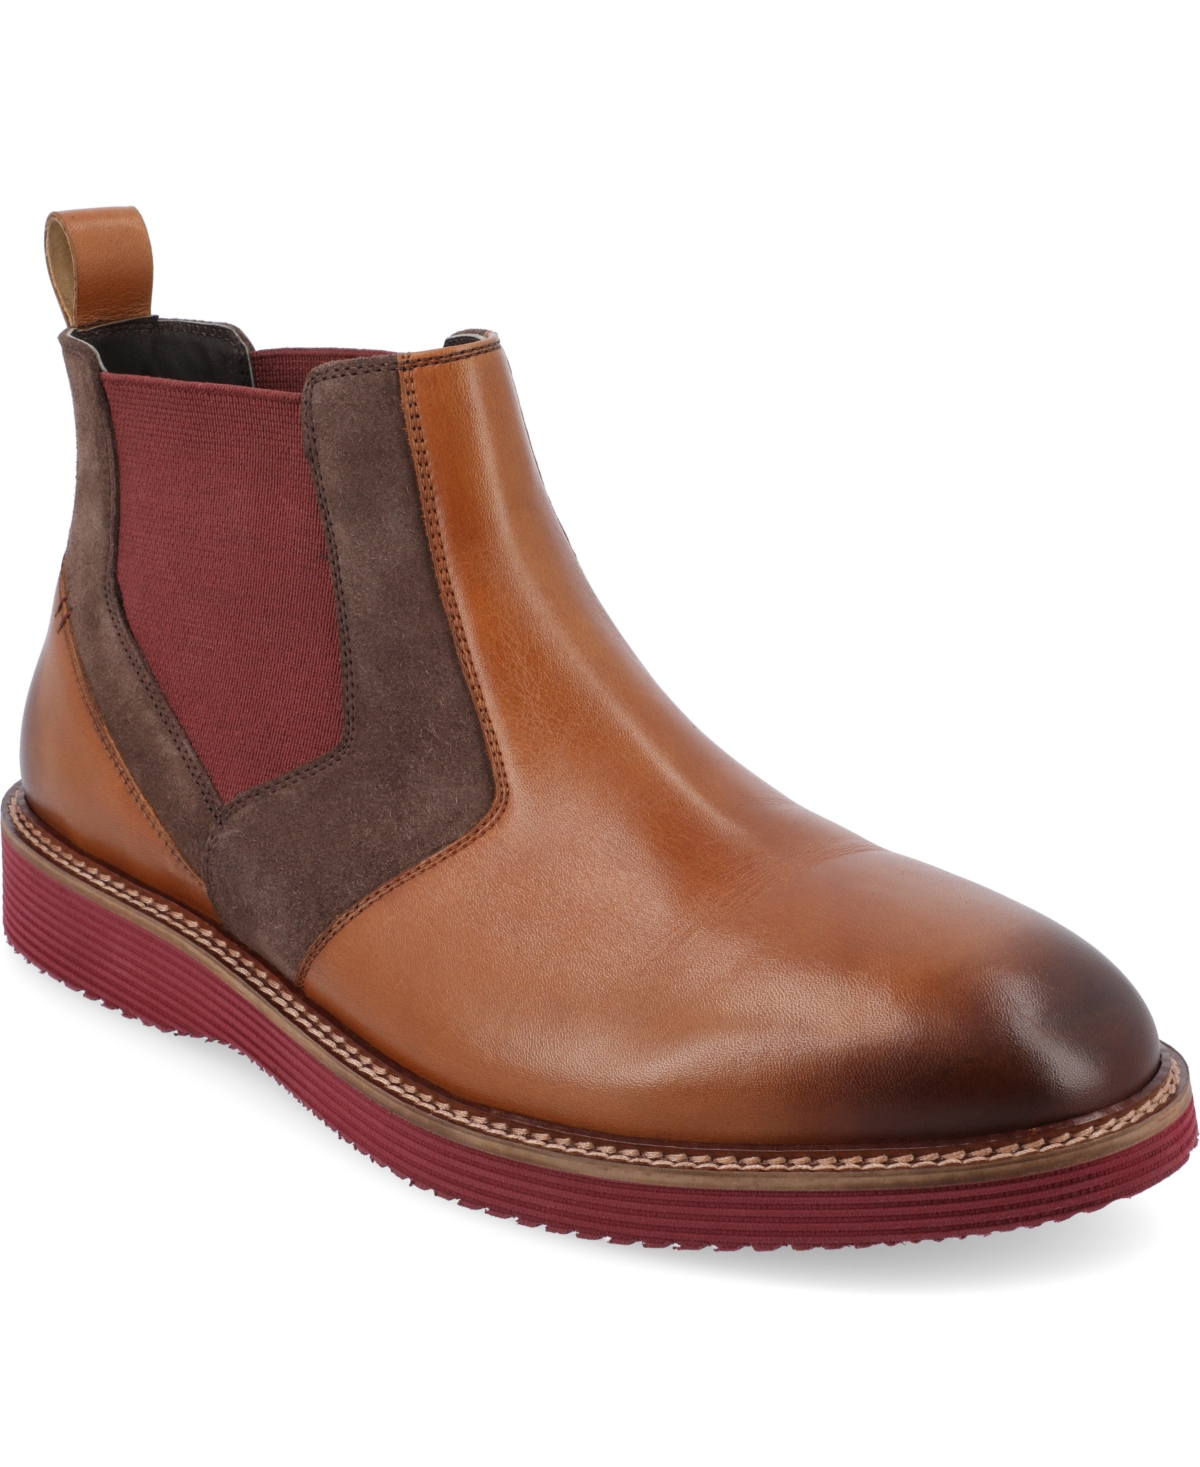 Men's Ventura Tru Comfort Foam Plain Toe Chelsea Boots - Cognac